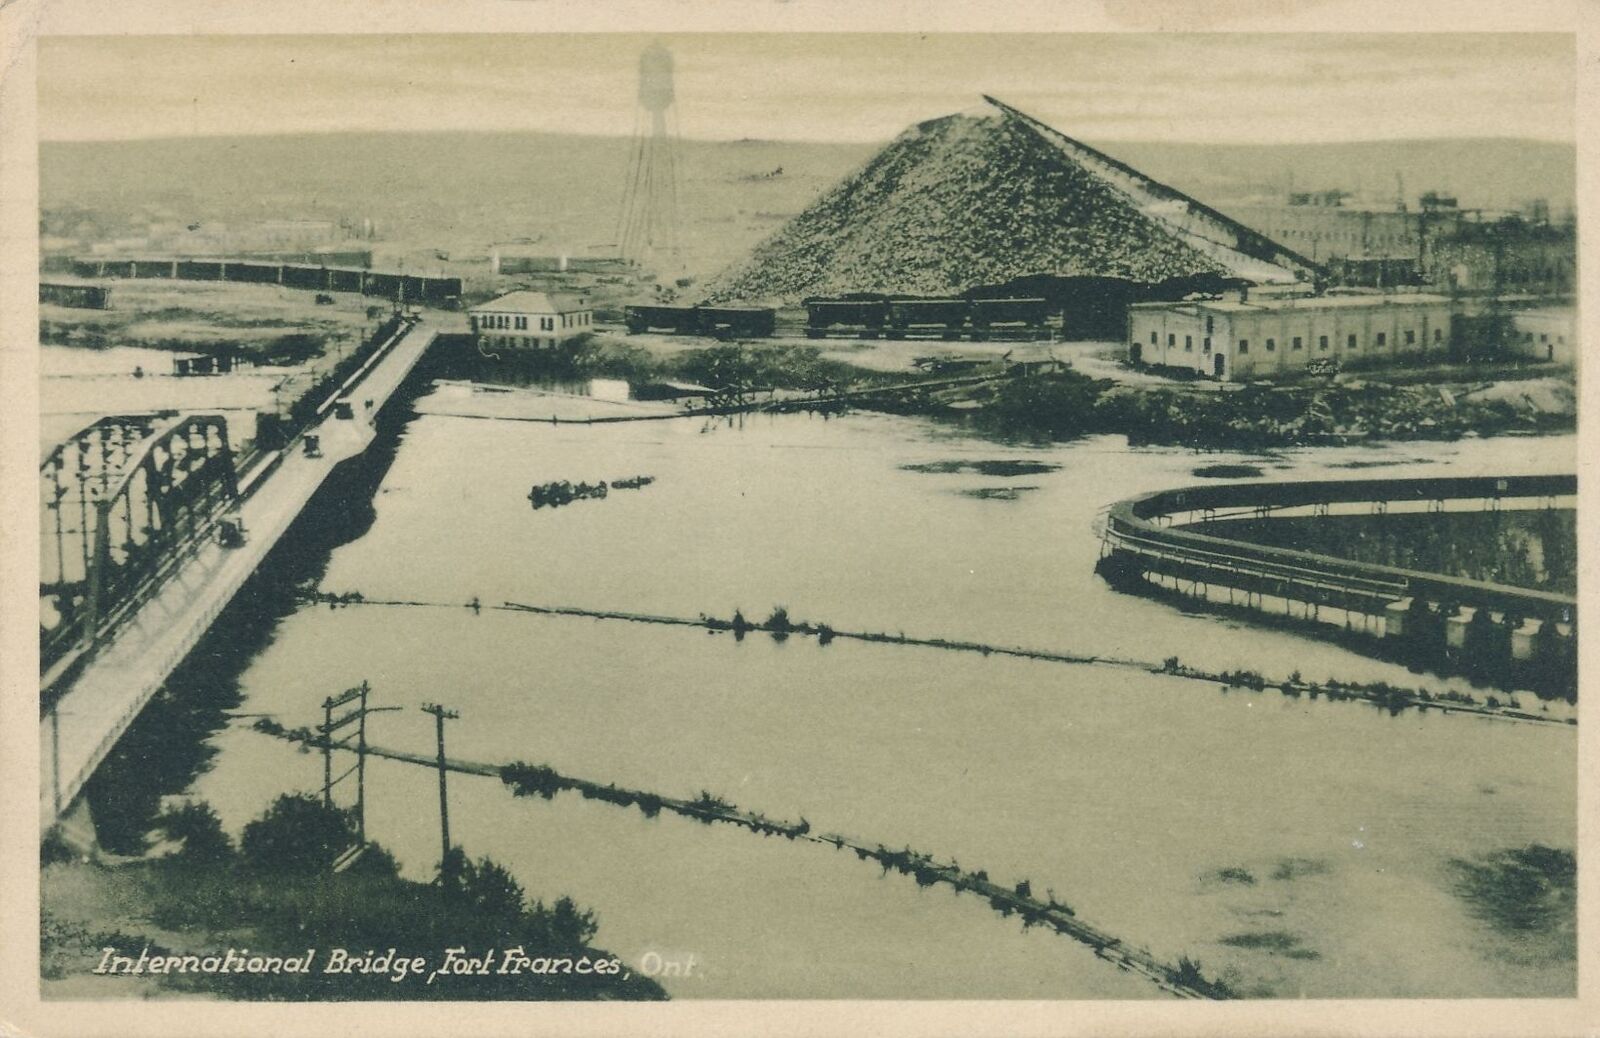 FORT FRANCES ON - International Bridge Postcard - 1927